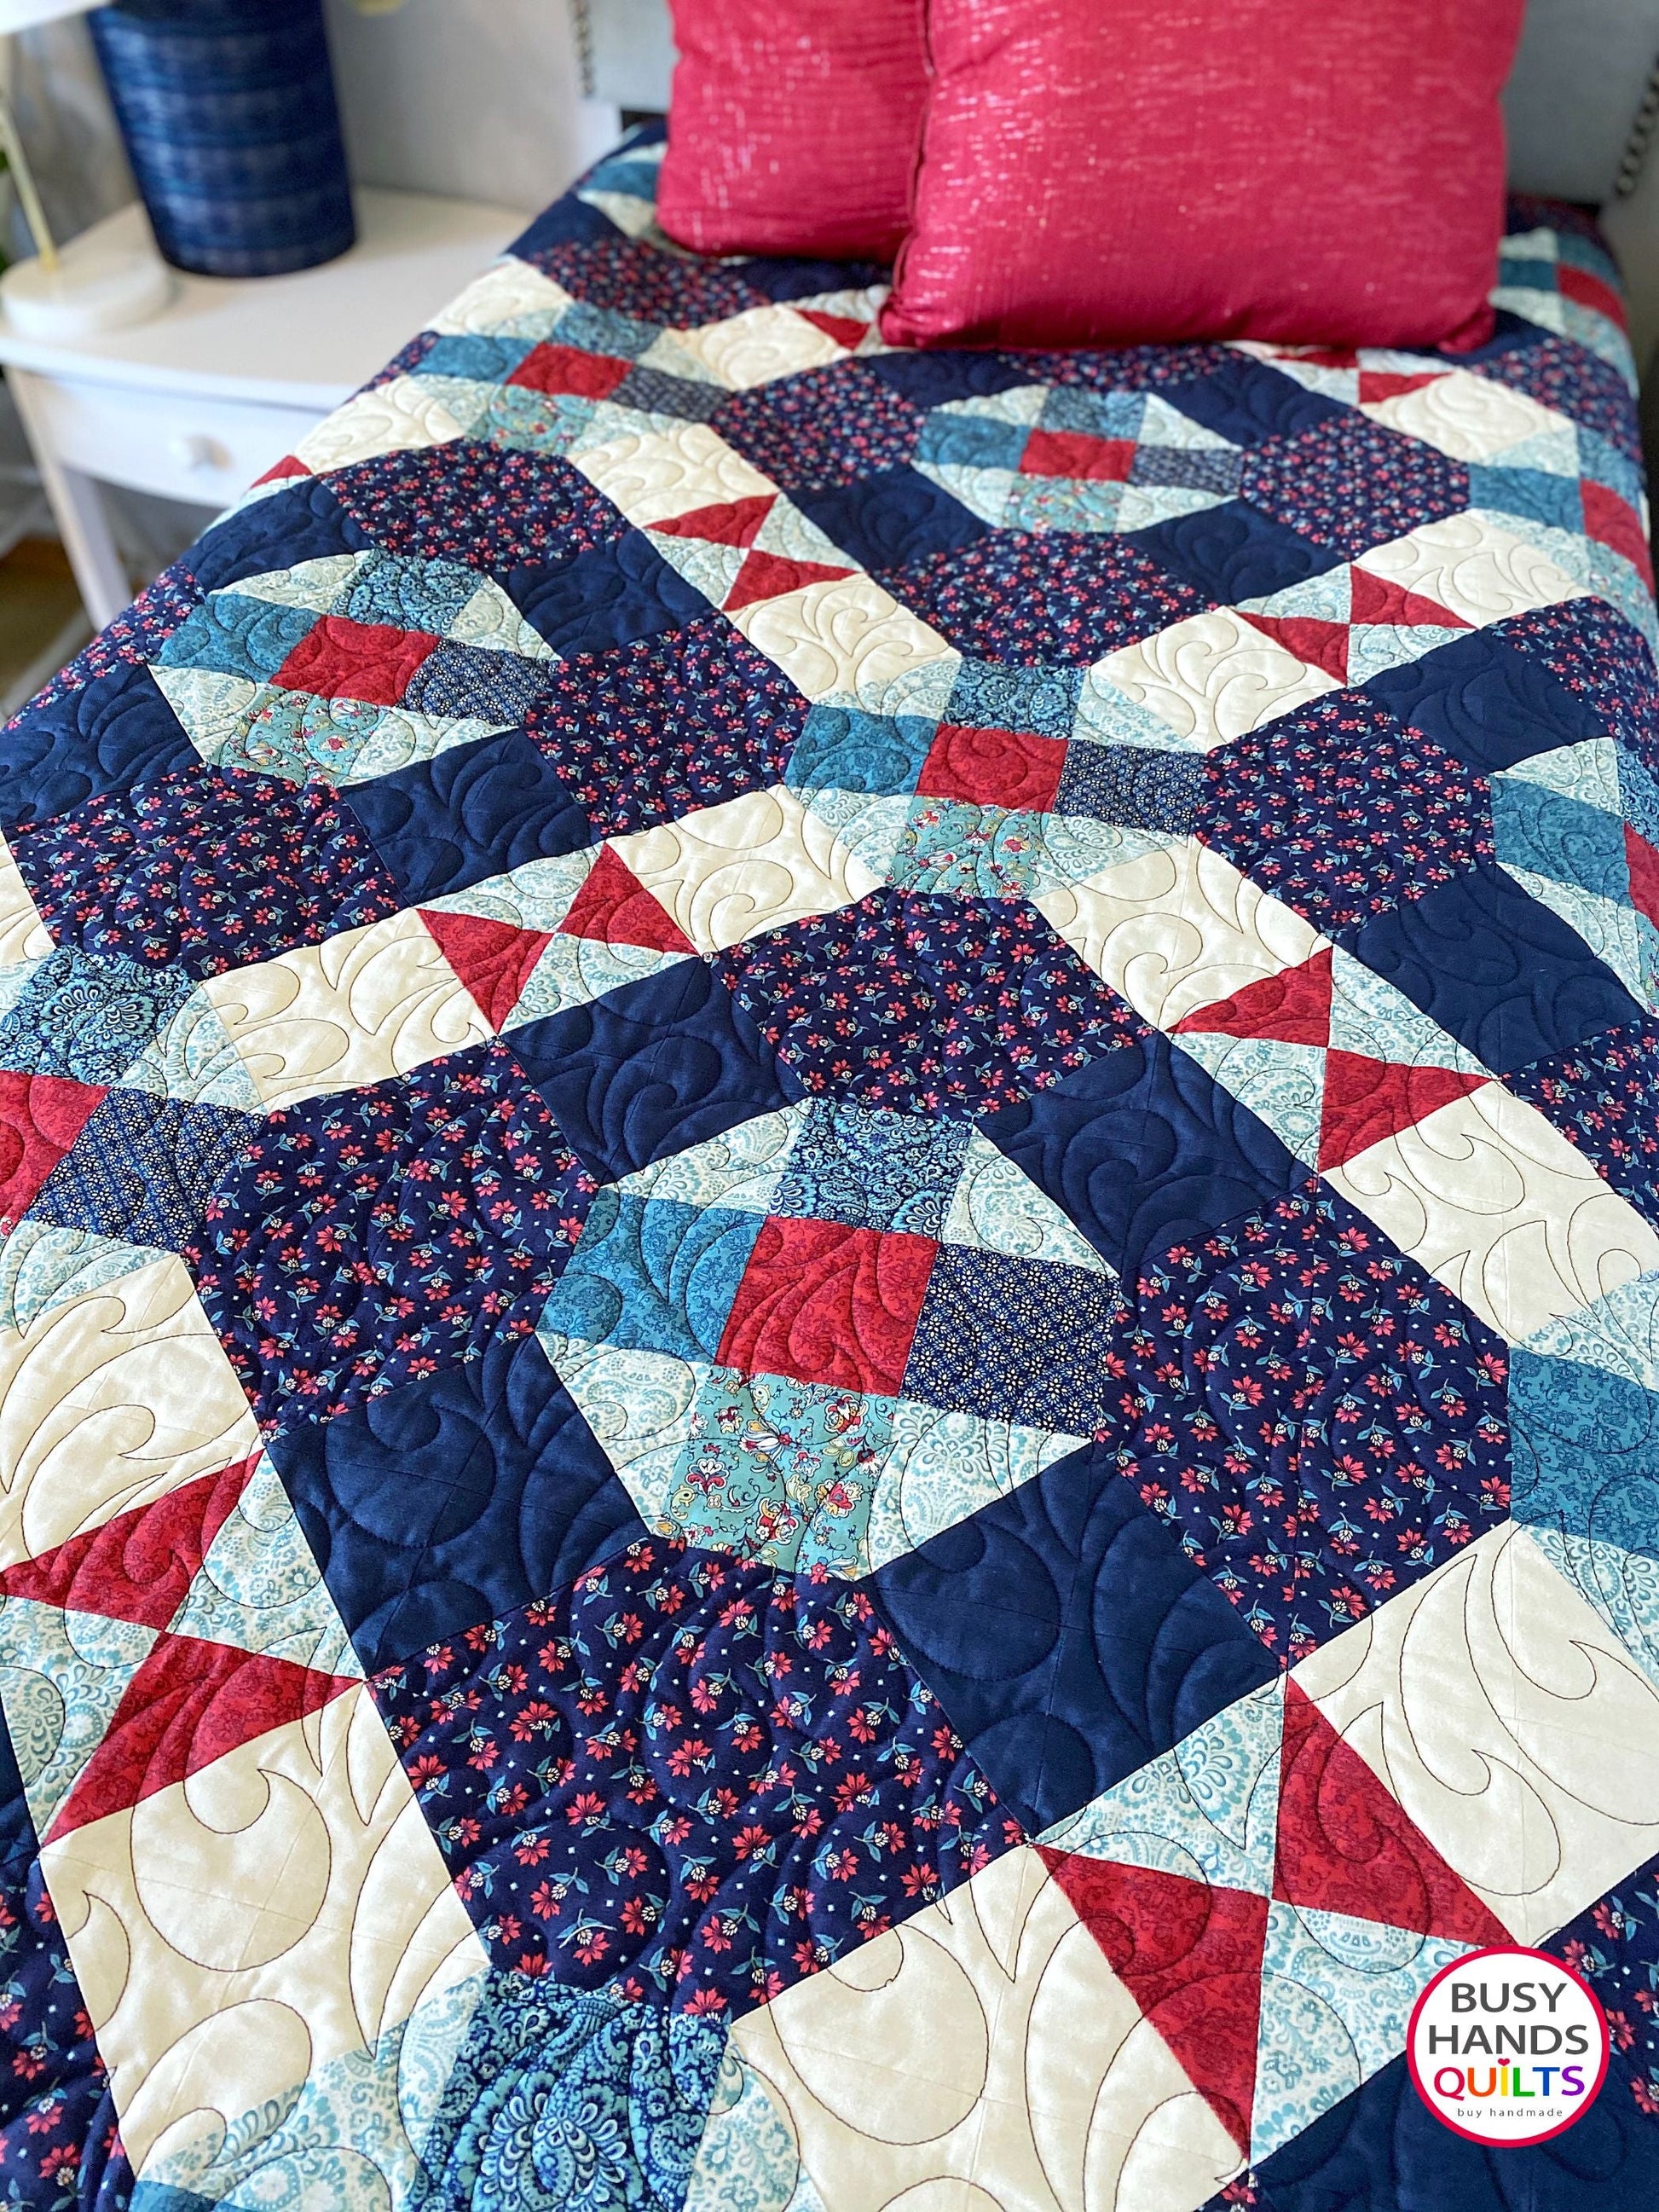 Handmade Nantucket Throw Quilt in Grand Versailles Busy Hands Quilts $349